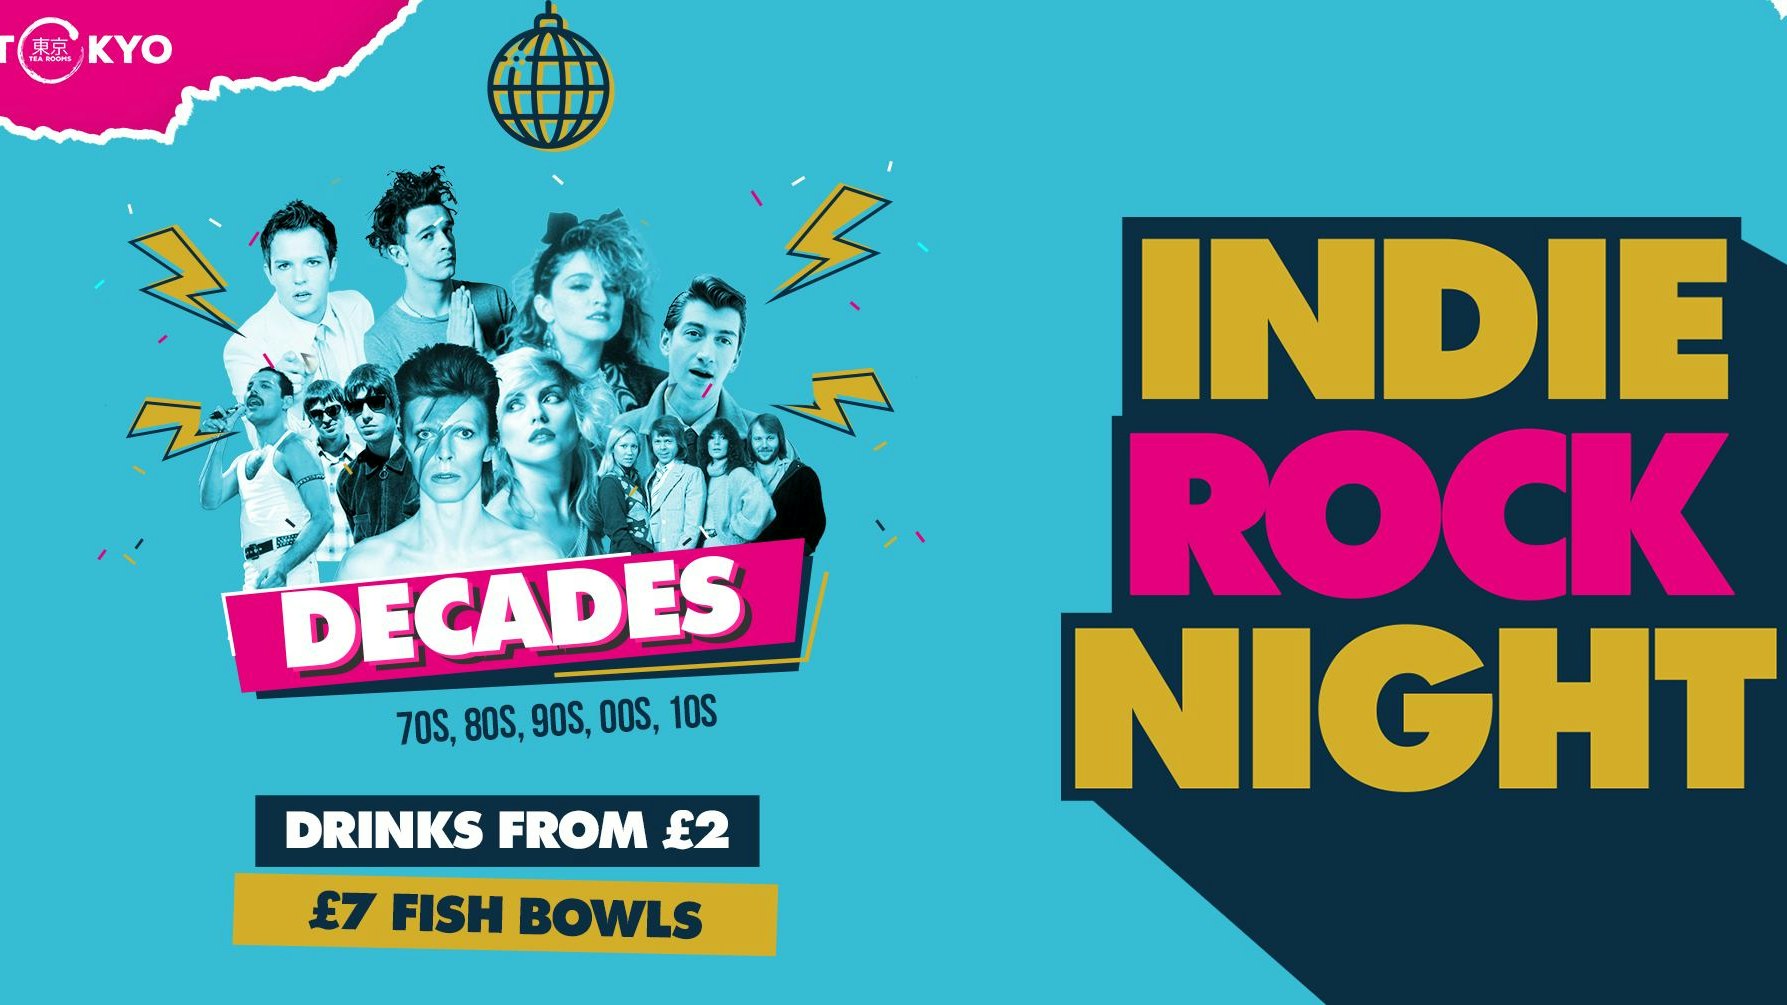 Indie Rock Night ∙ DECADES (60s, 70s, 80s, 90s, 00s, 10s)